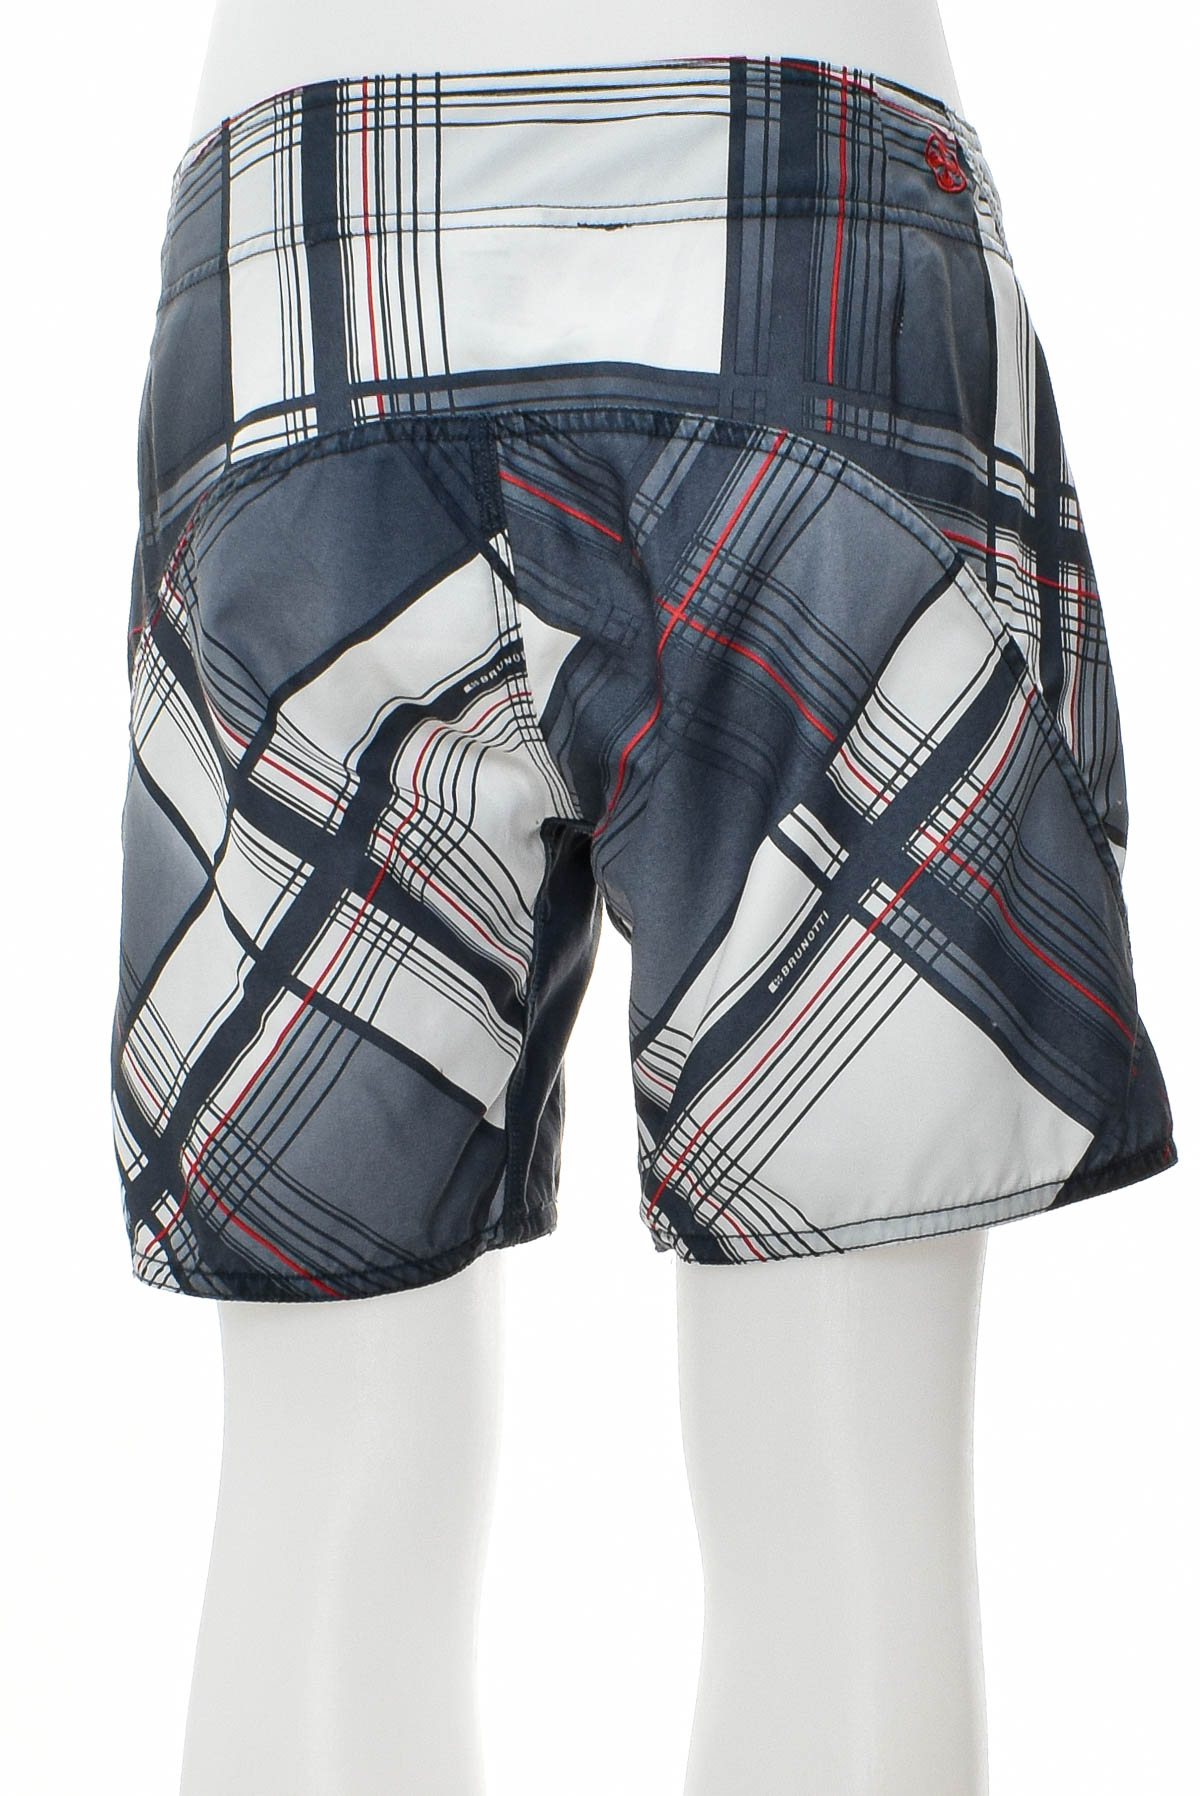 Men's shorts - Brunotti - 1